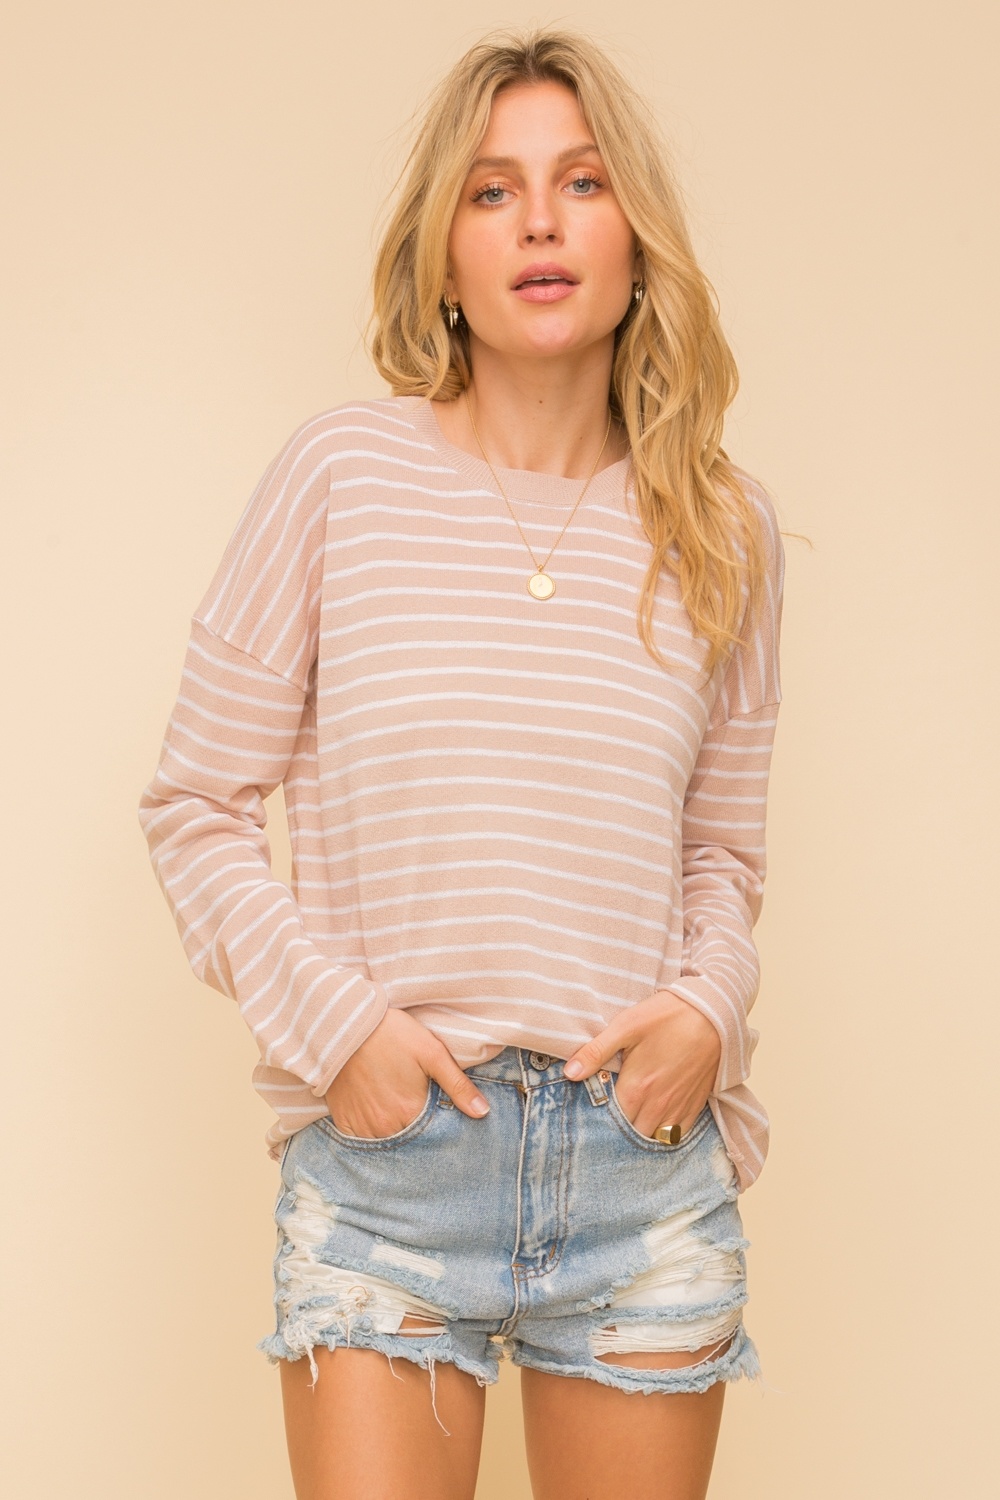 Hem & Thread Oversized Pin Stripe Sweater Top